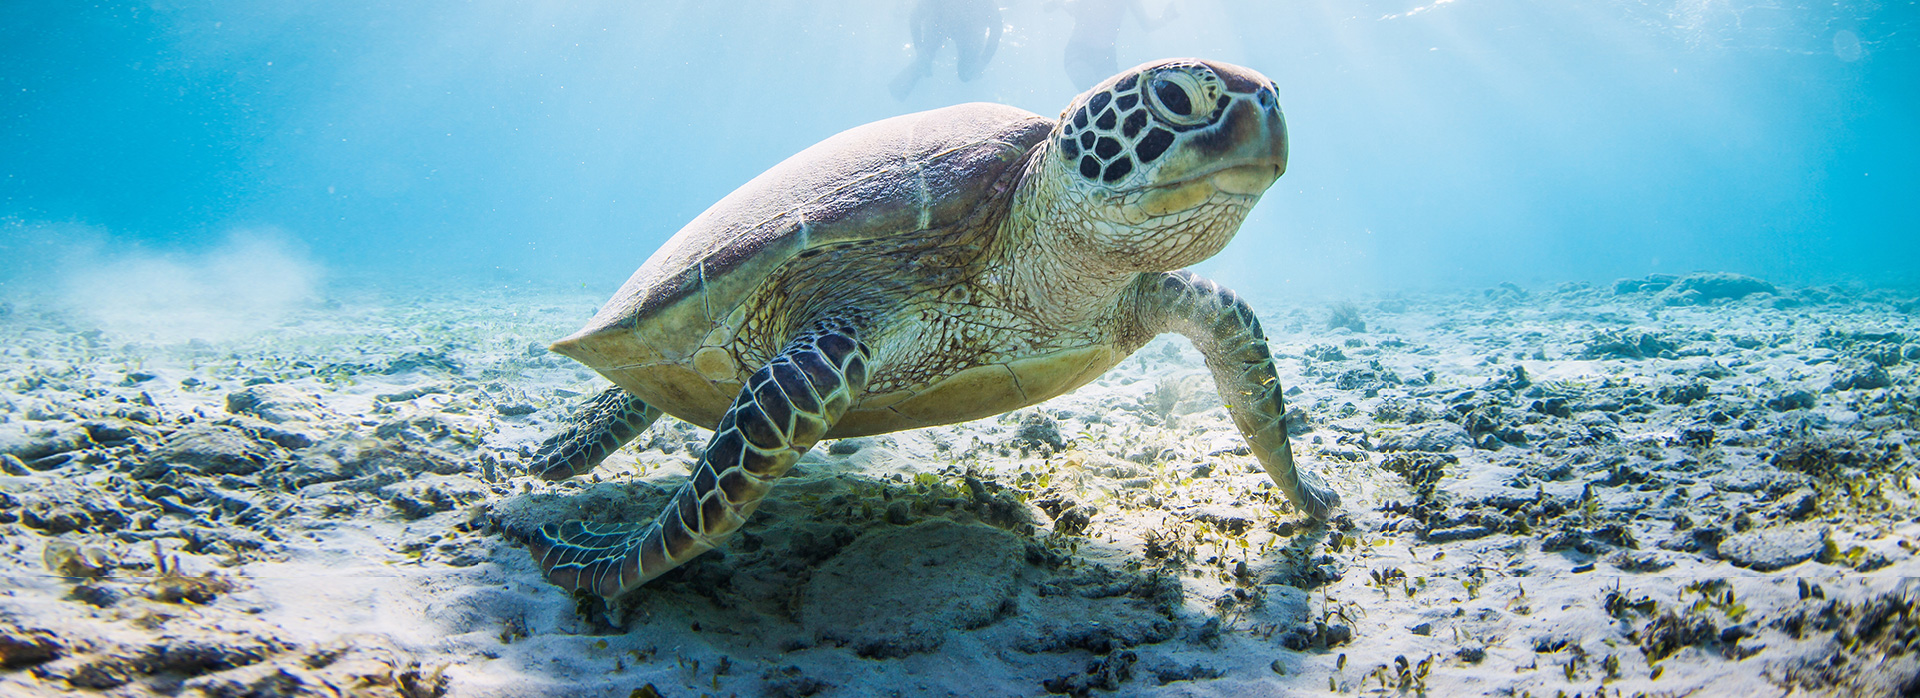 sea turtle in the deep blue sea